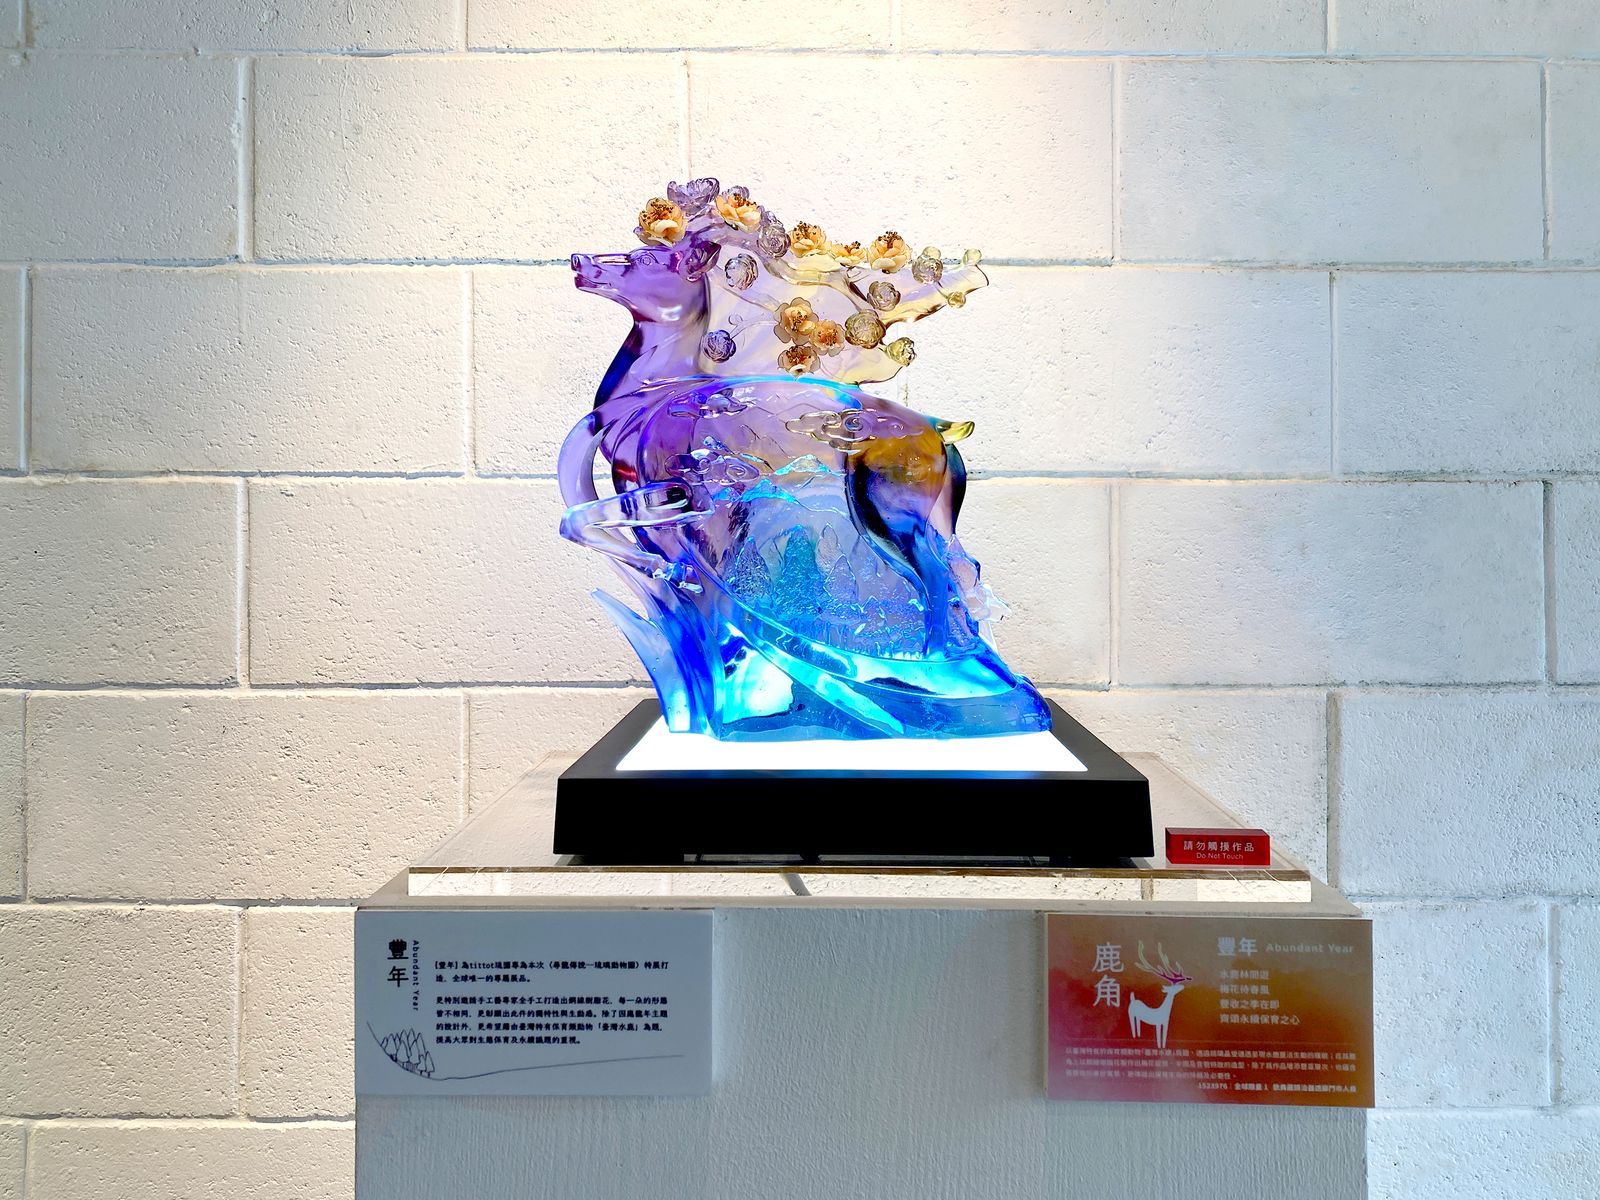 tittot琉園以「龍的形象傳說」為主題，策畫「尋龍傳說」趣味特展，即日起在宜蘭傳藝園區的「器透廊」玻璃工藝所熱鬧開展